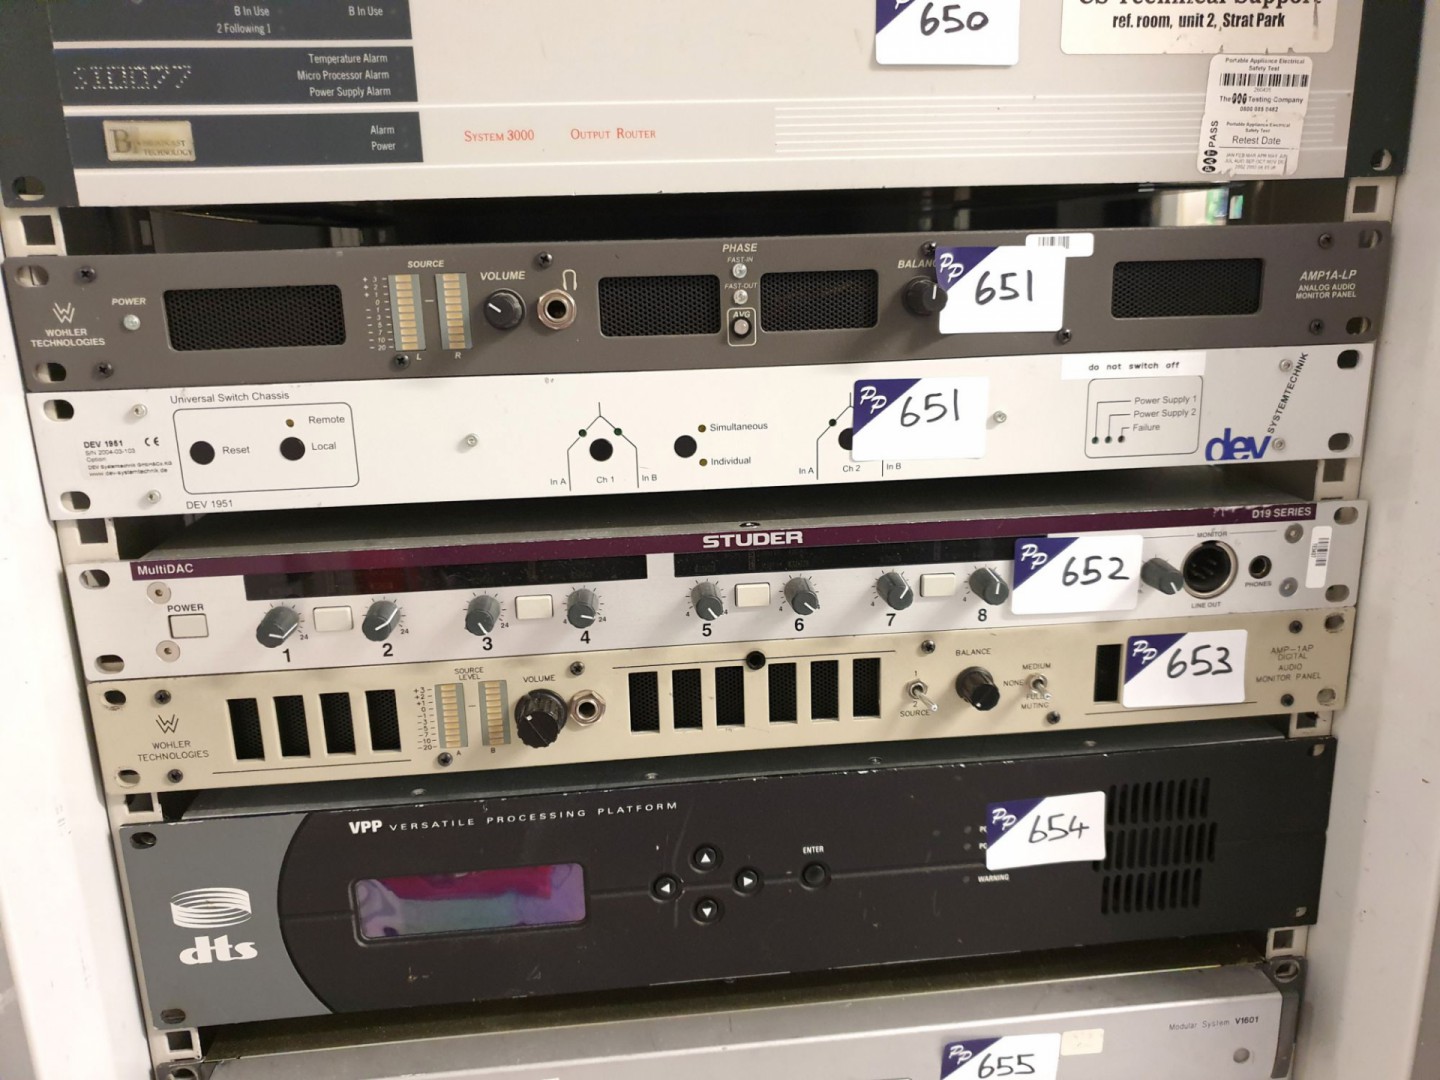 Wohler AMP-1AP digital audio monitor panel